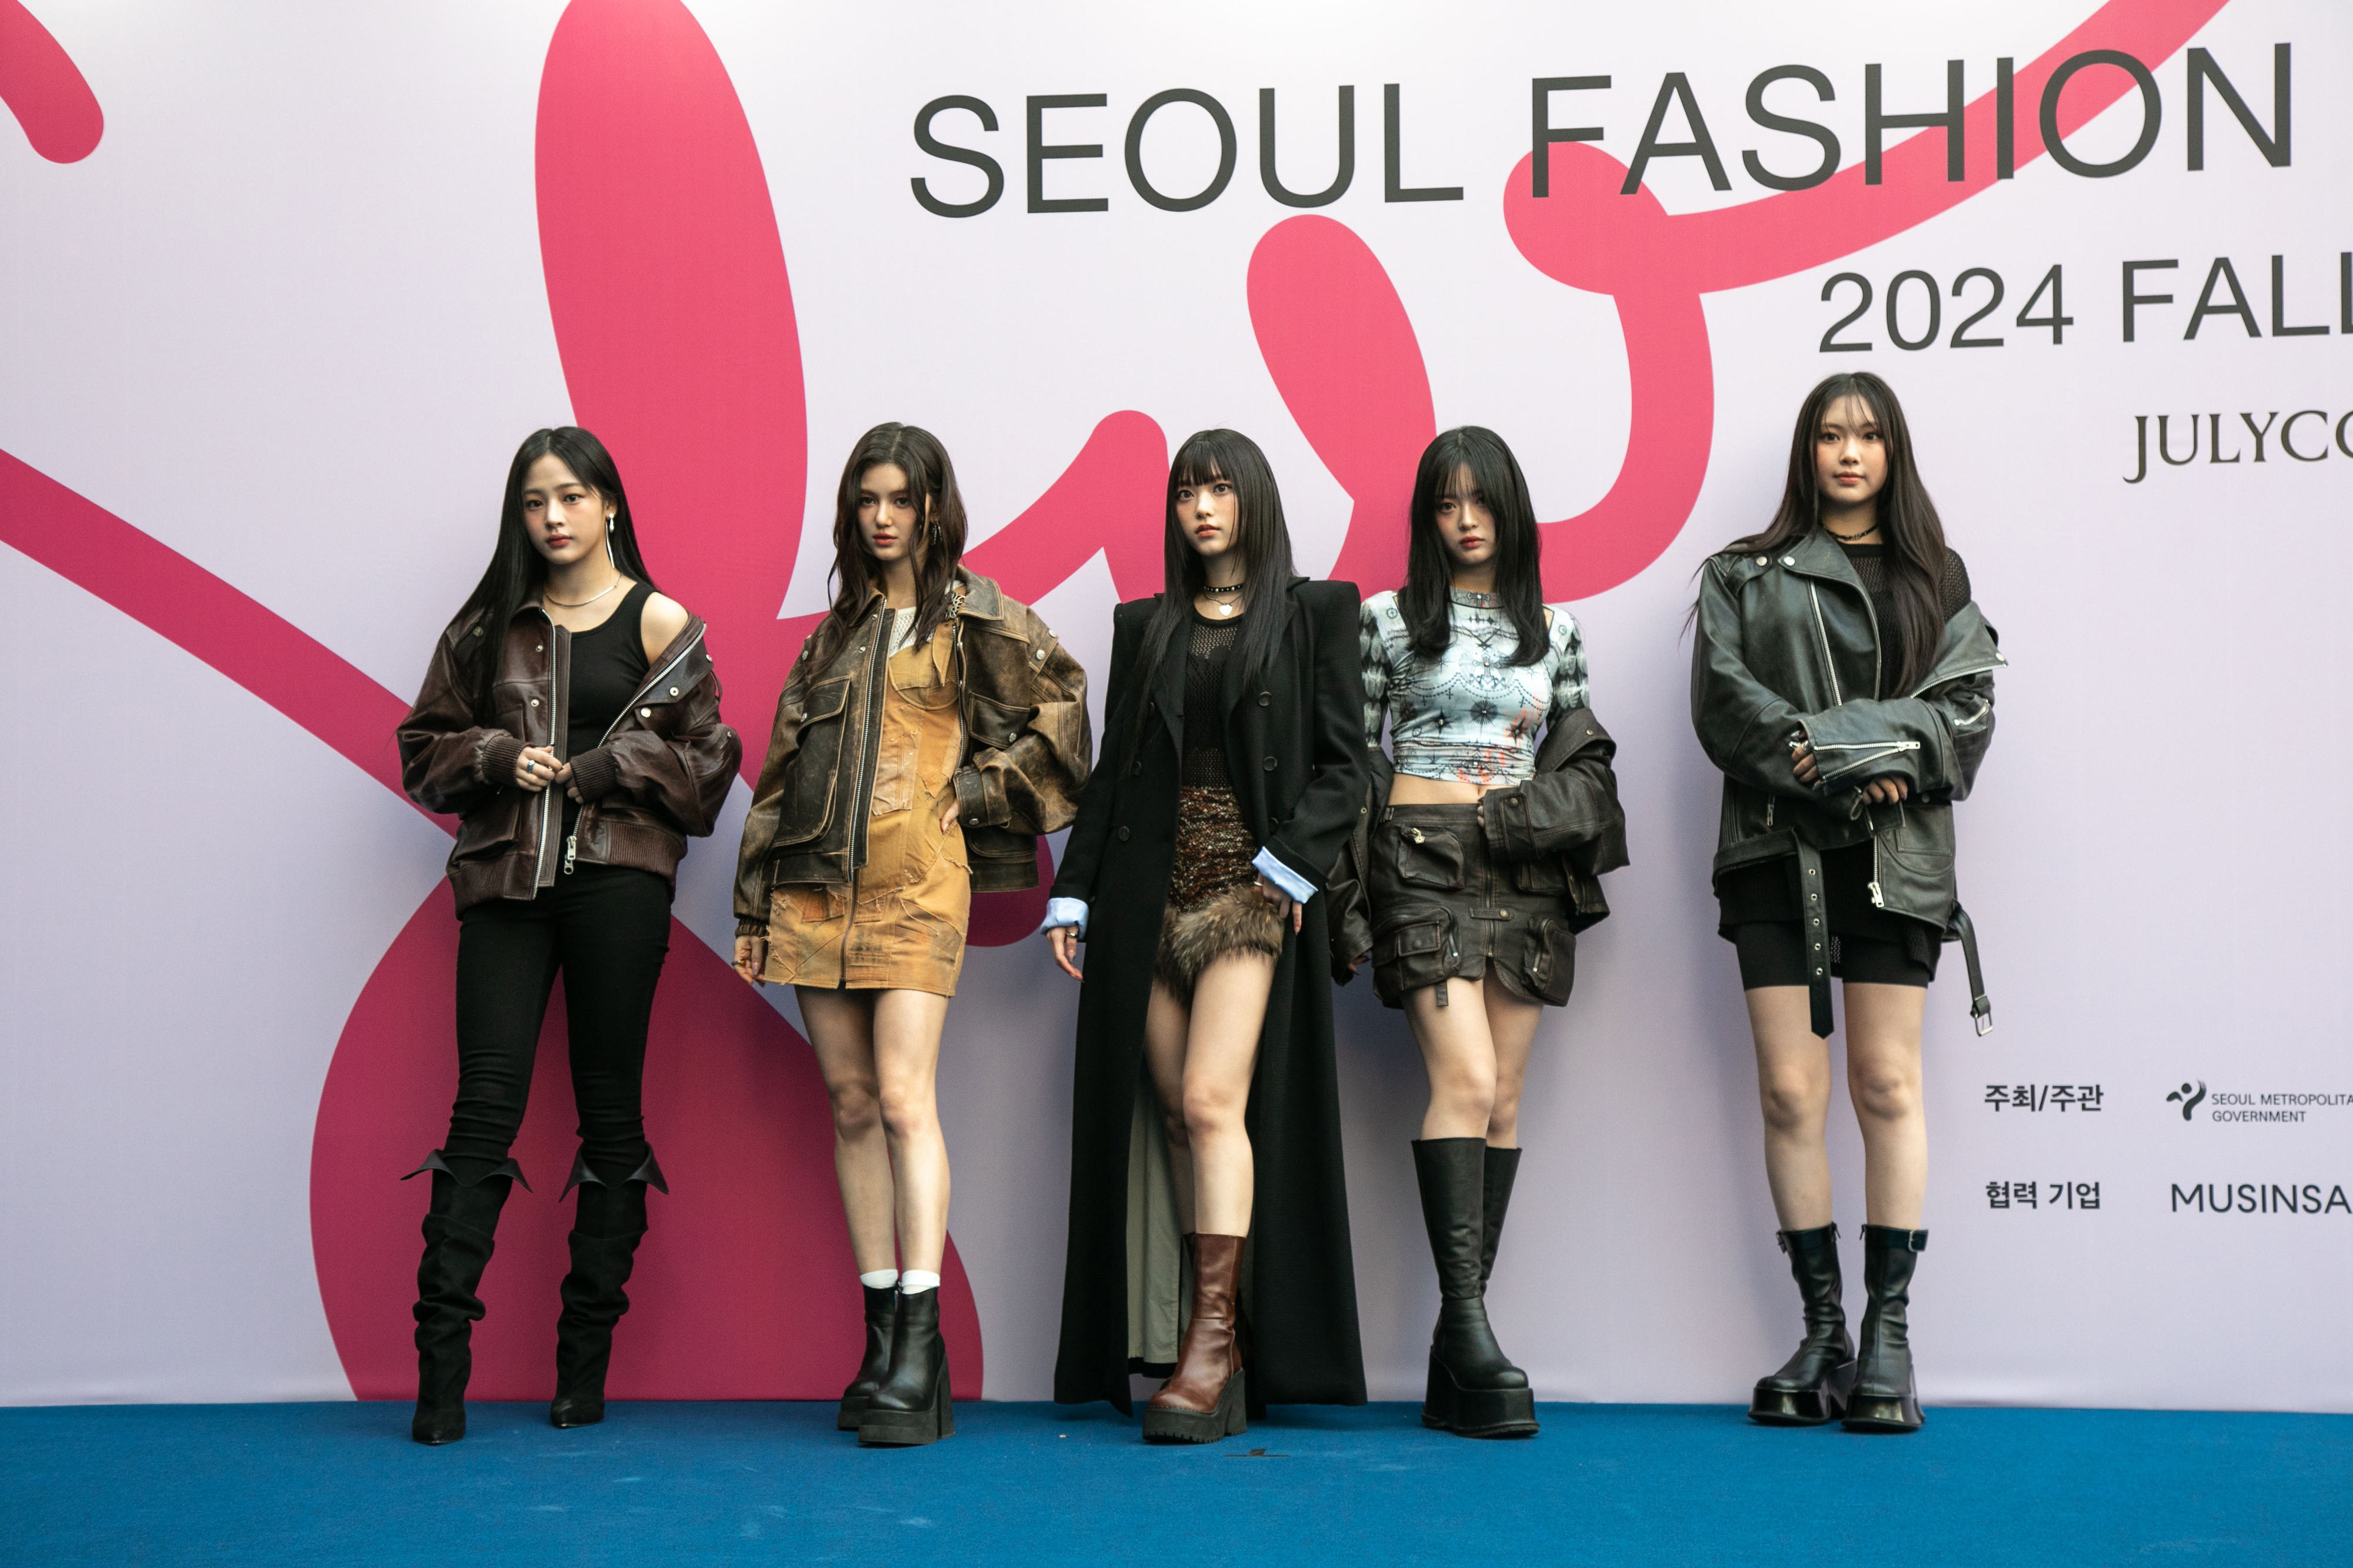 NewJeans members in Seoul, South Korea on 1 February 2024